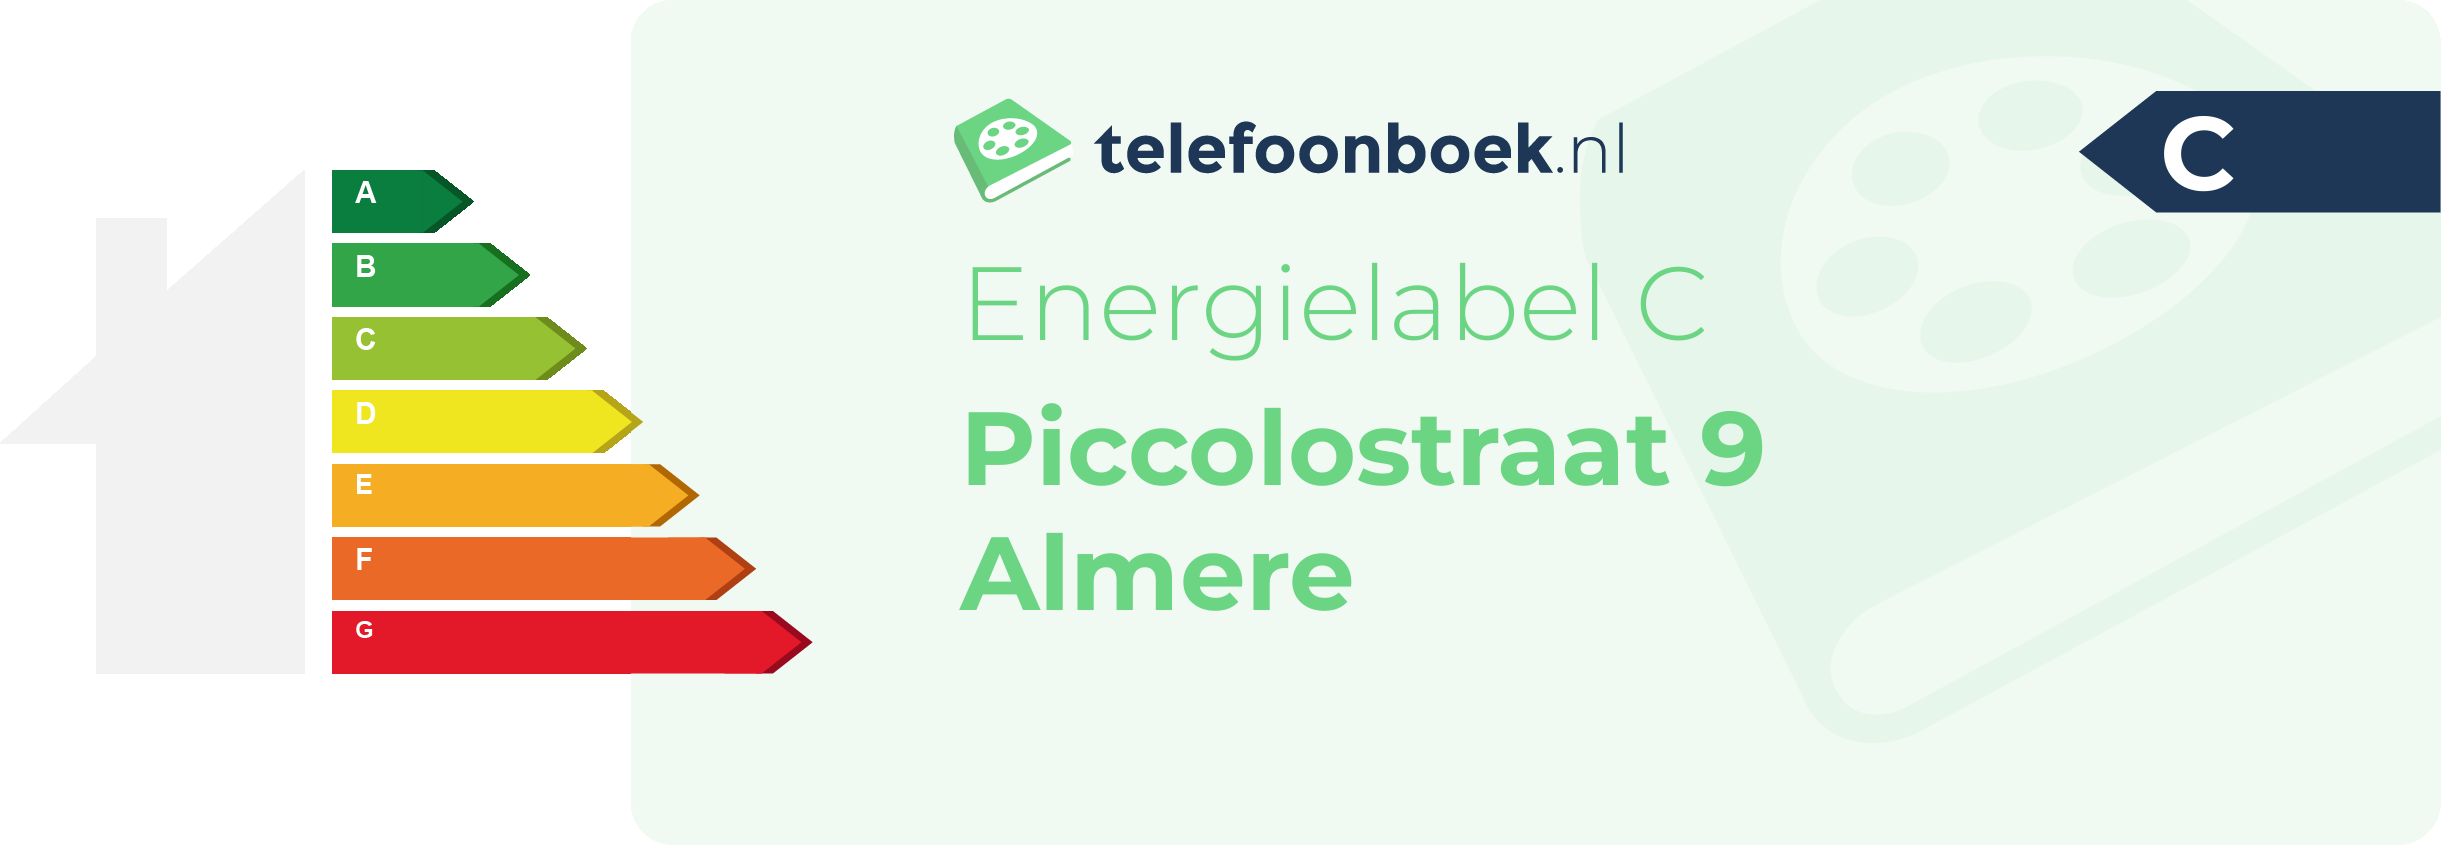 Energielabel Piccolostraat 9 Almere